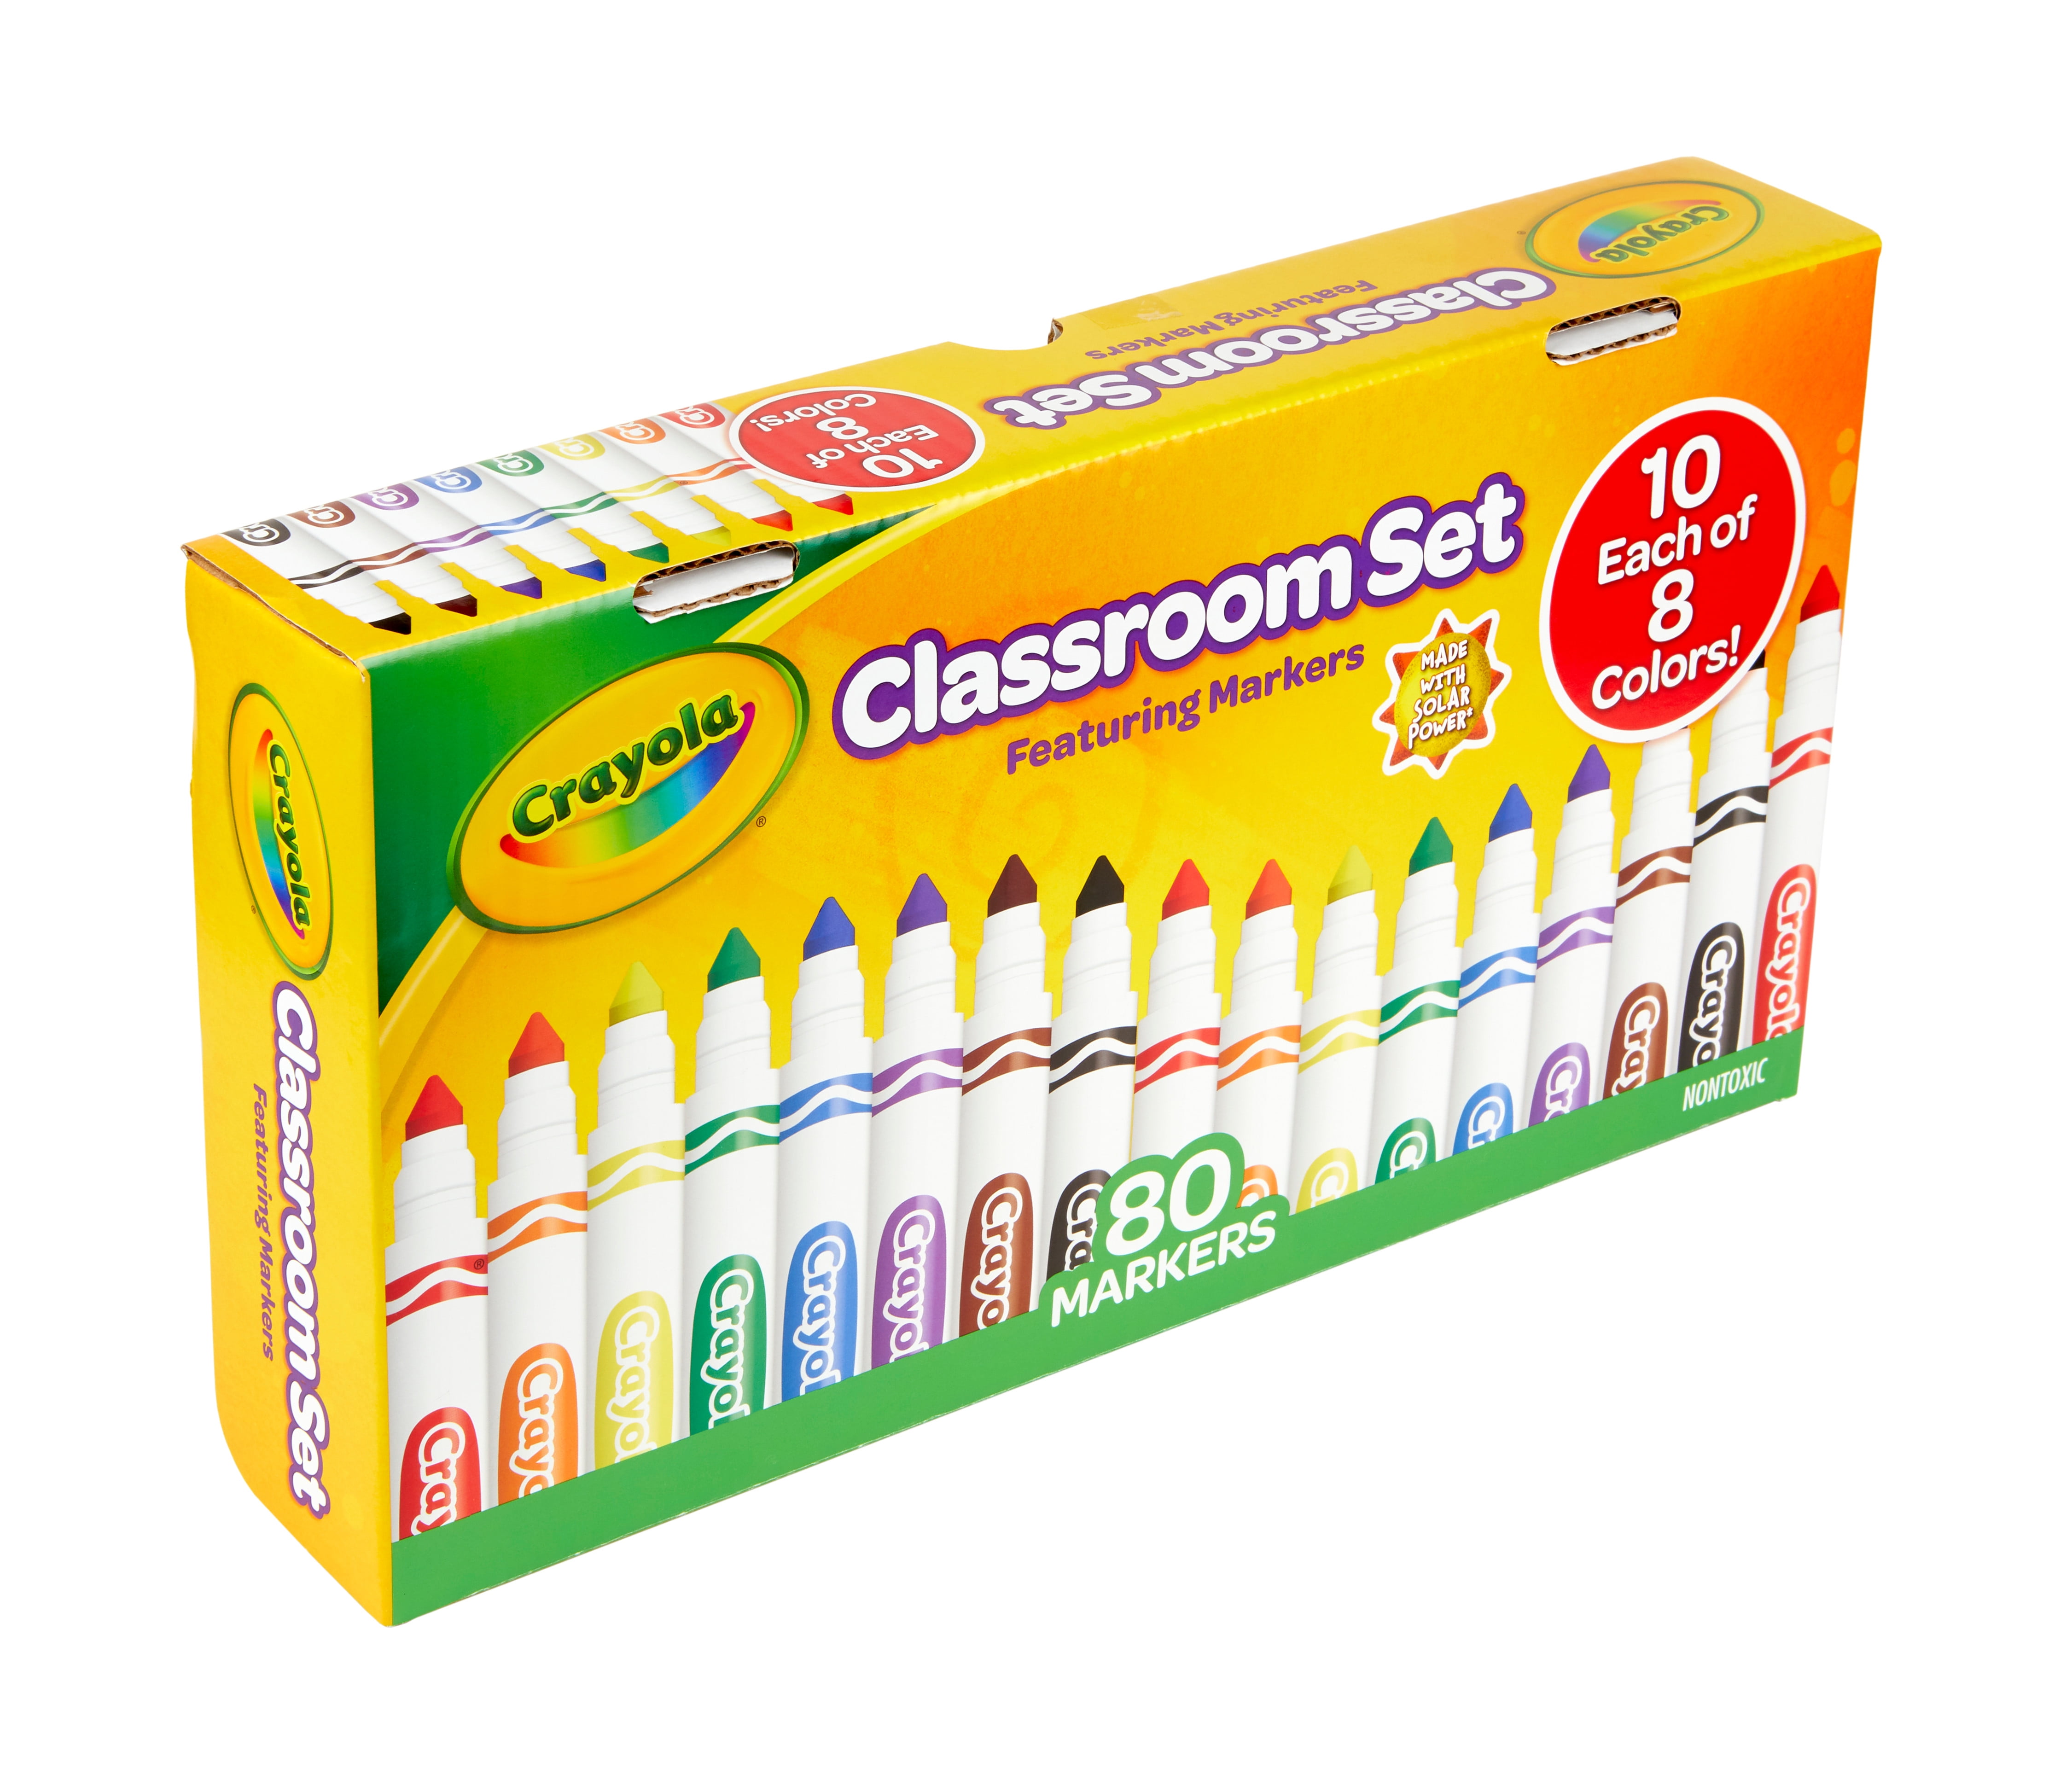 Crayola Broad Line Markers Classpack (256 Ct), Bulk School Supplies For  Teachers, Kids Markers For School, Classroom Supplies